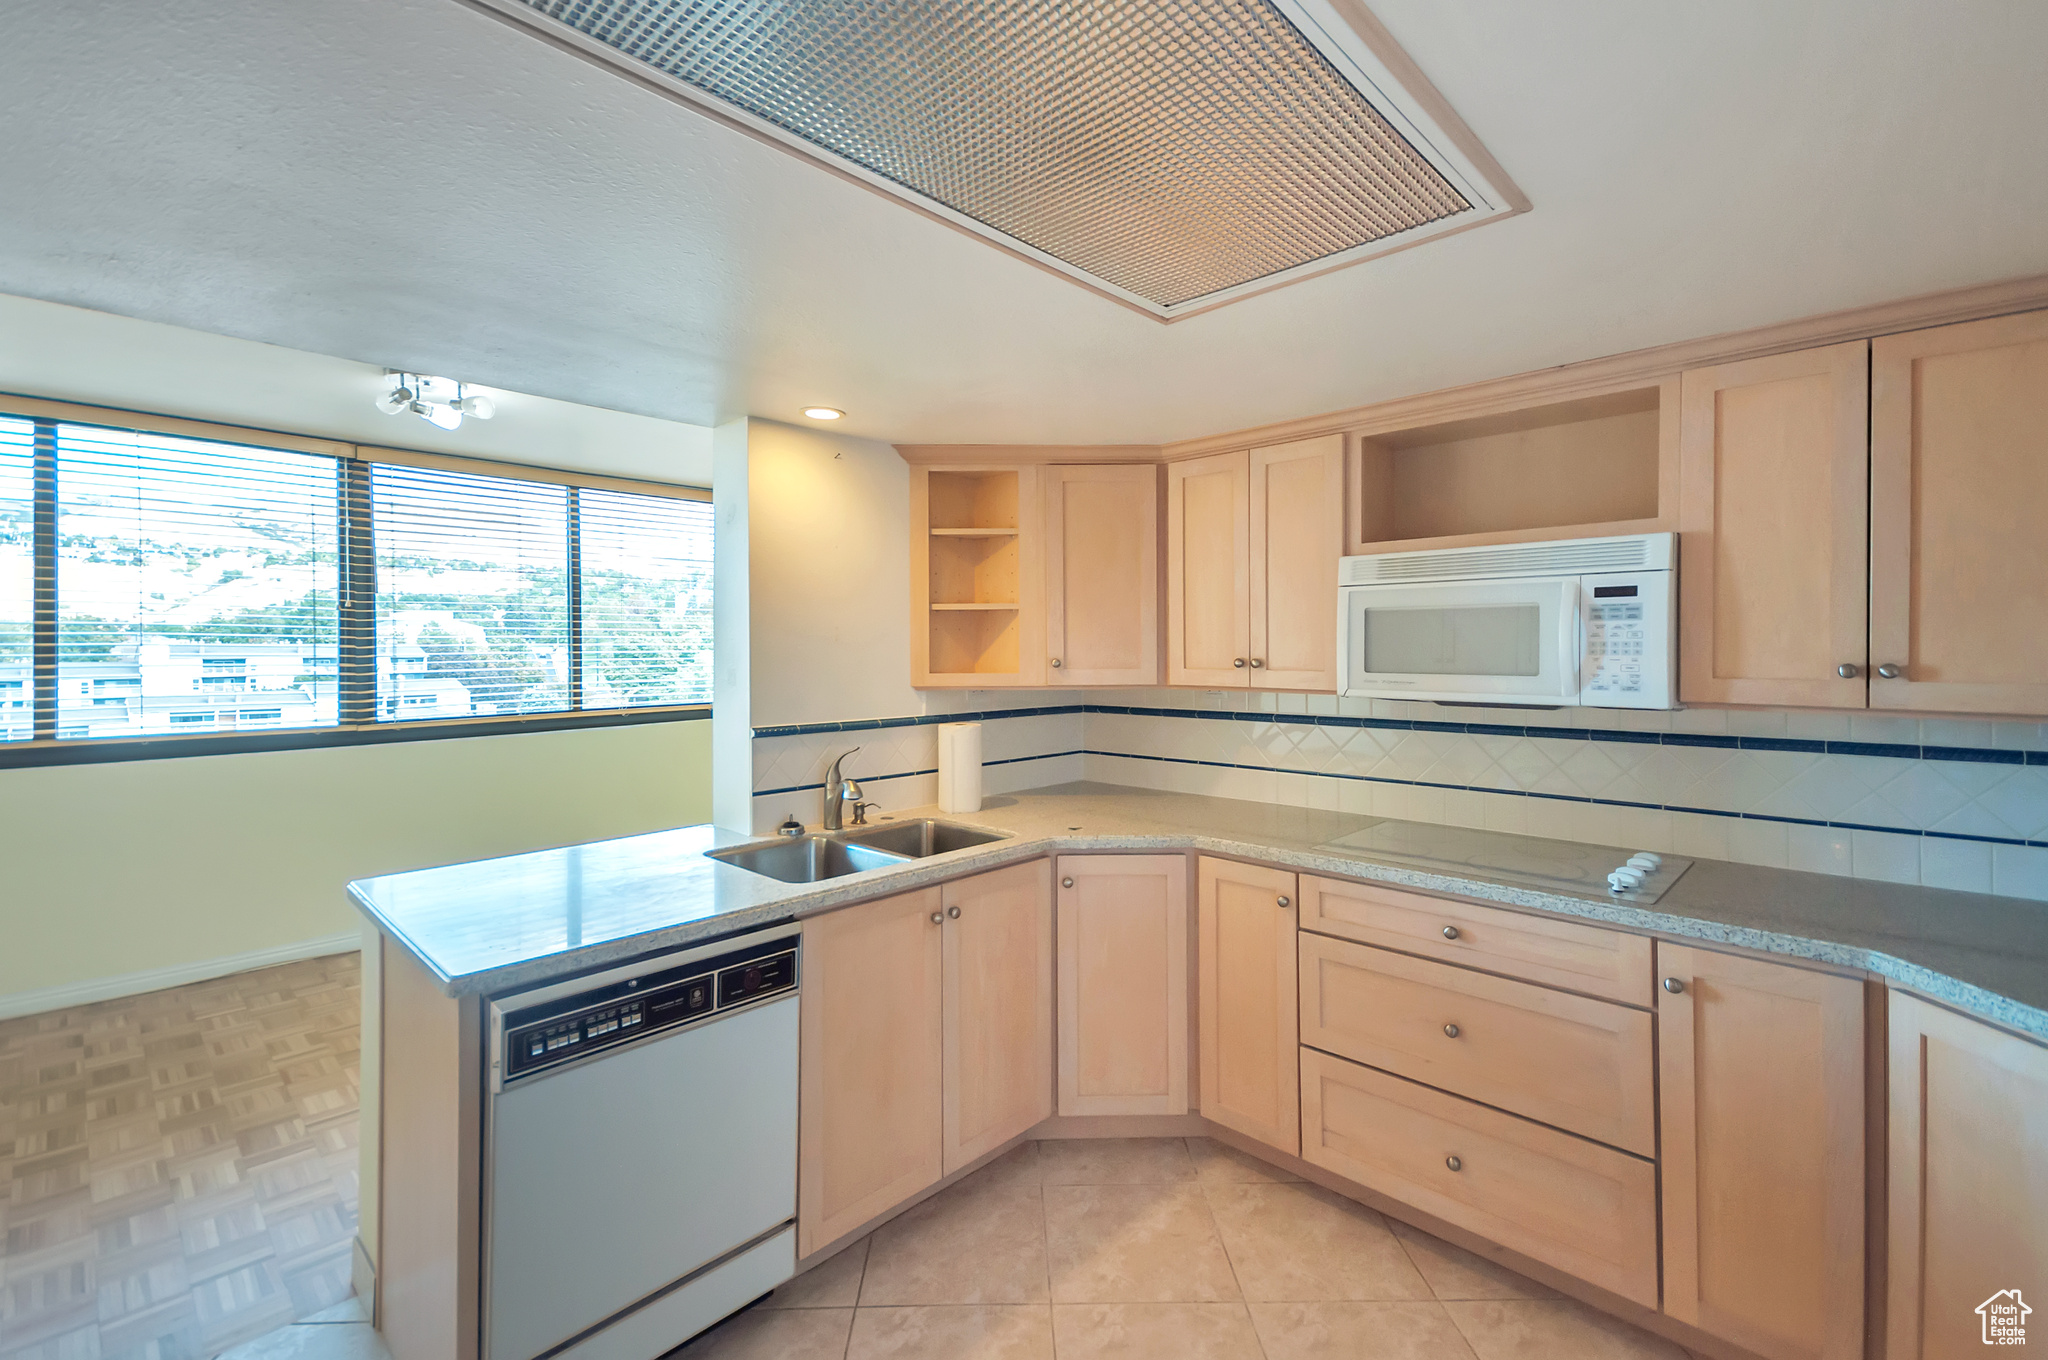 Kitchen with light brown cabinets, white appliances, tasteful backsplash, and sink